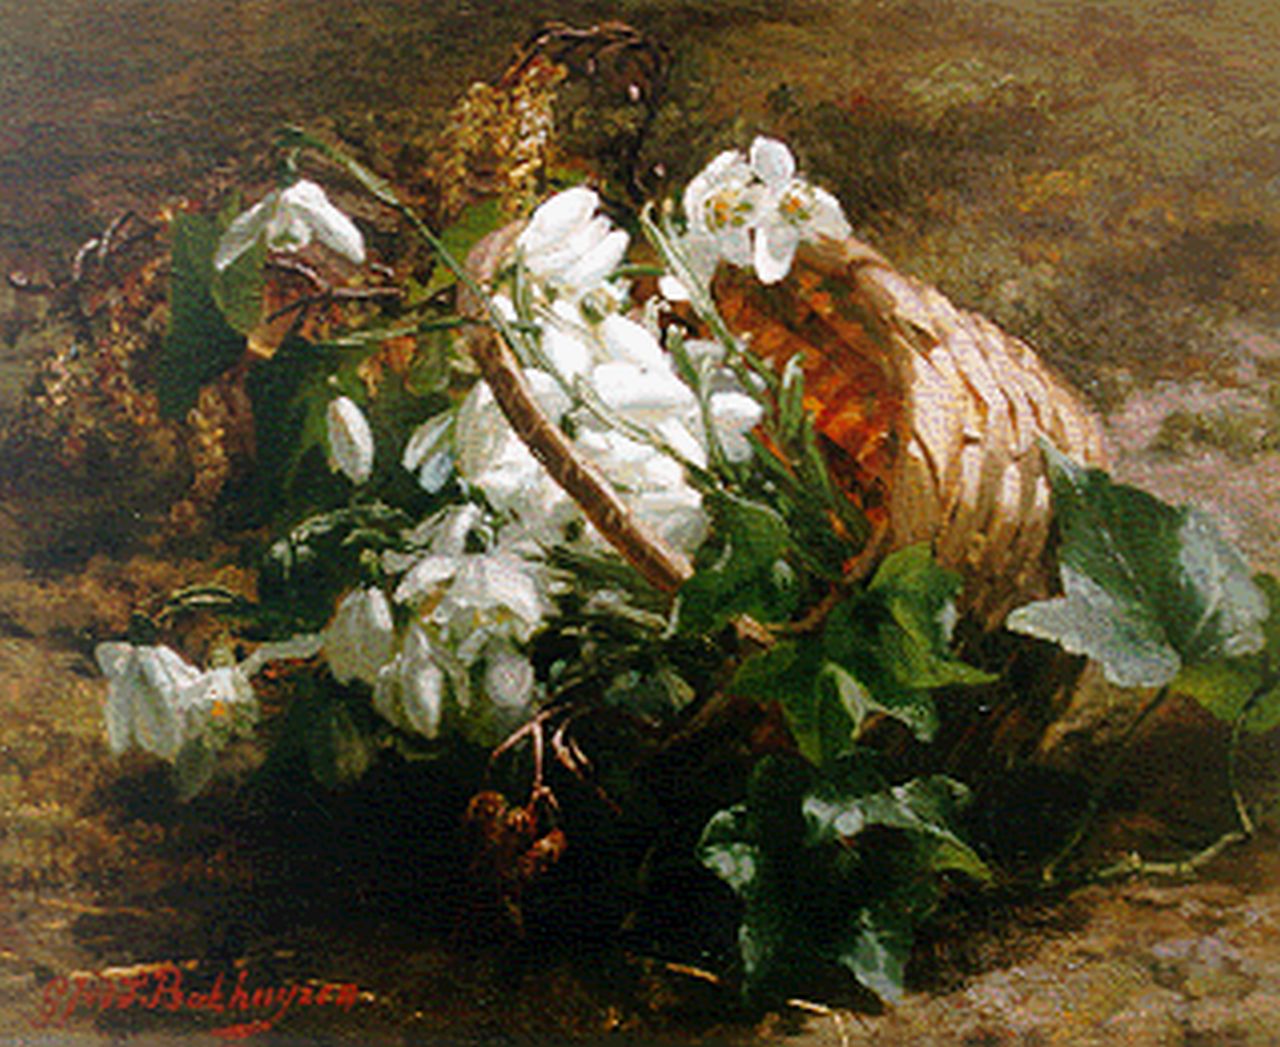 Sande Bakhuyzen G.J. van de | 'Gerardine' Jacoba van de Sande Bakhuyzen, Snowdrops in a basket, oil on panel 24.5 x 31.0 cm, signed l.l.